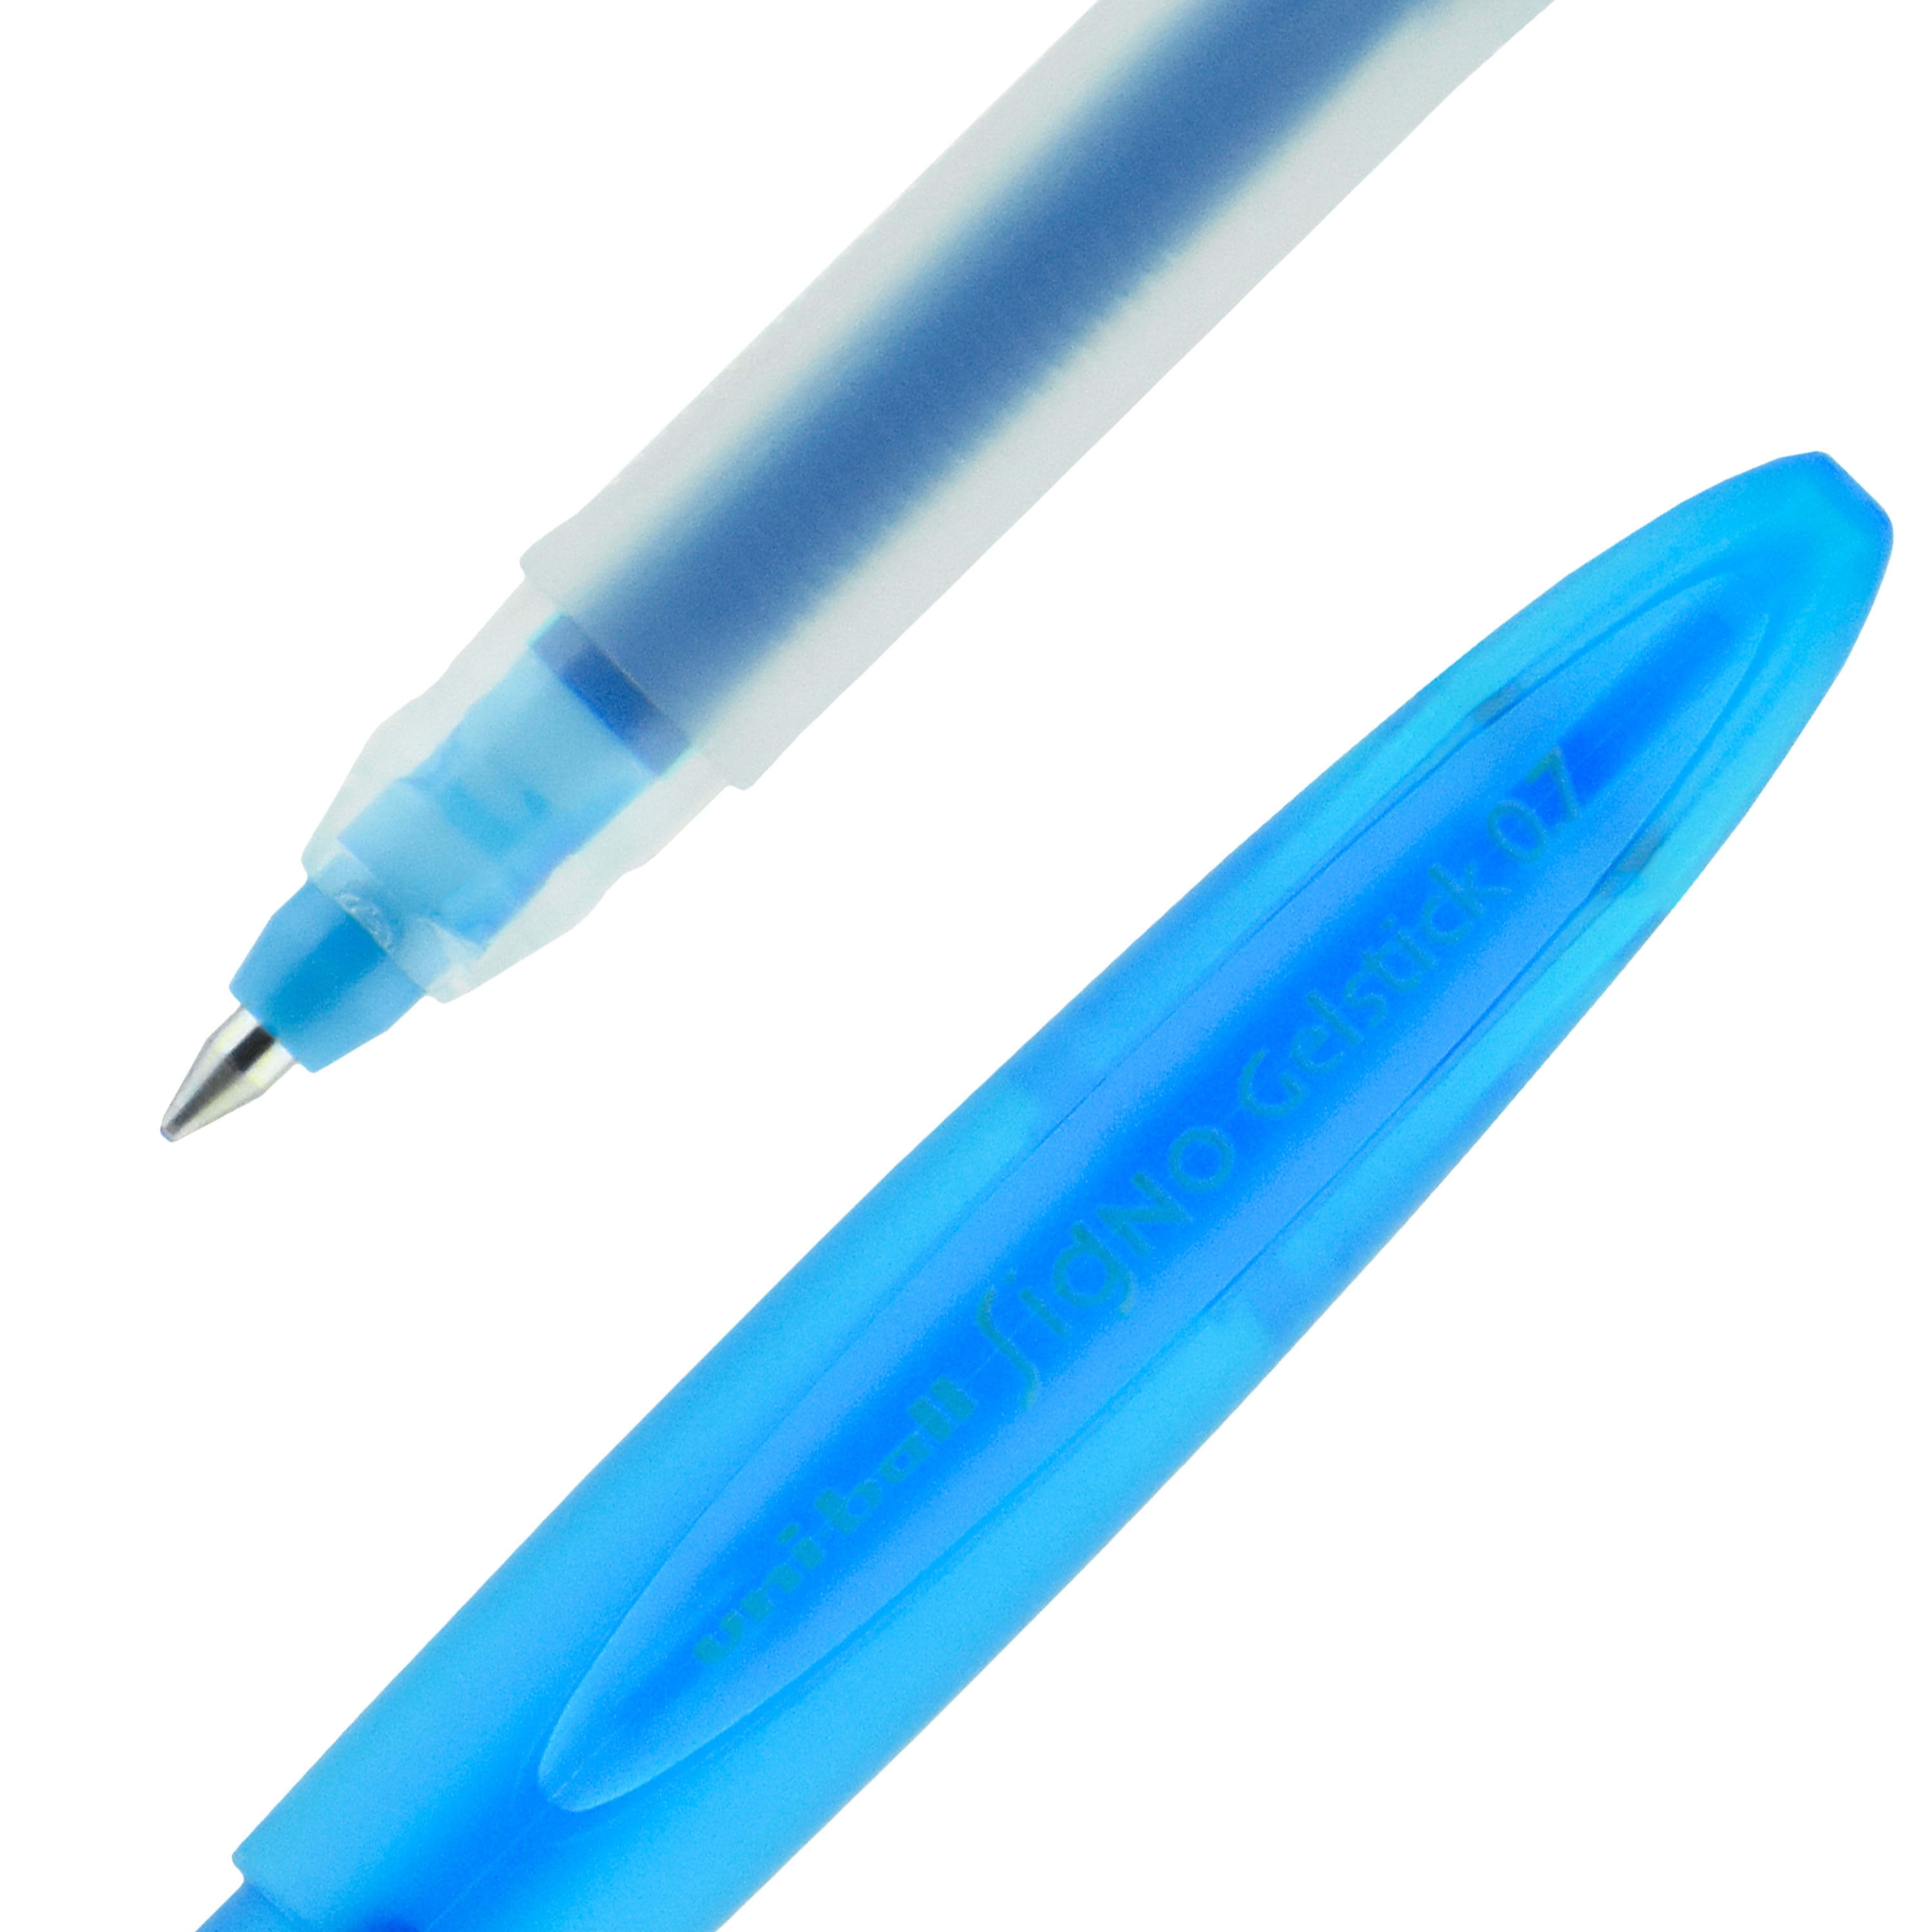 uni-ball Bit Stick Medium Point Gel Pens, 8 Colored Ink Pens(73855)